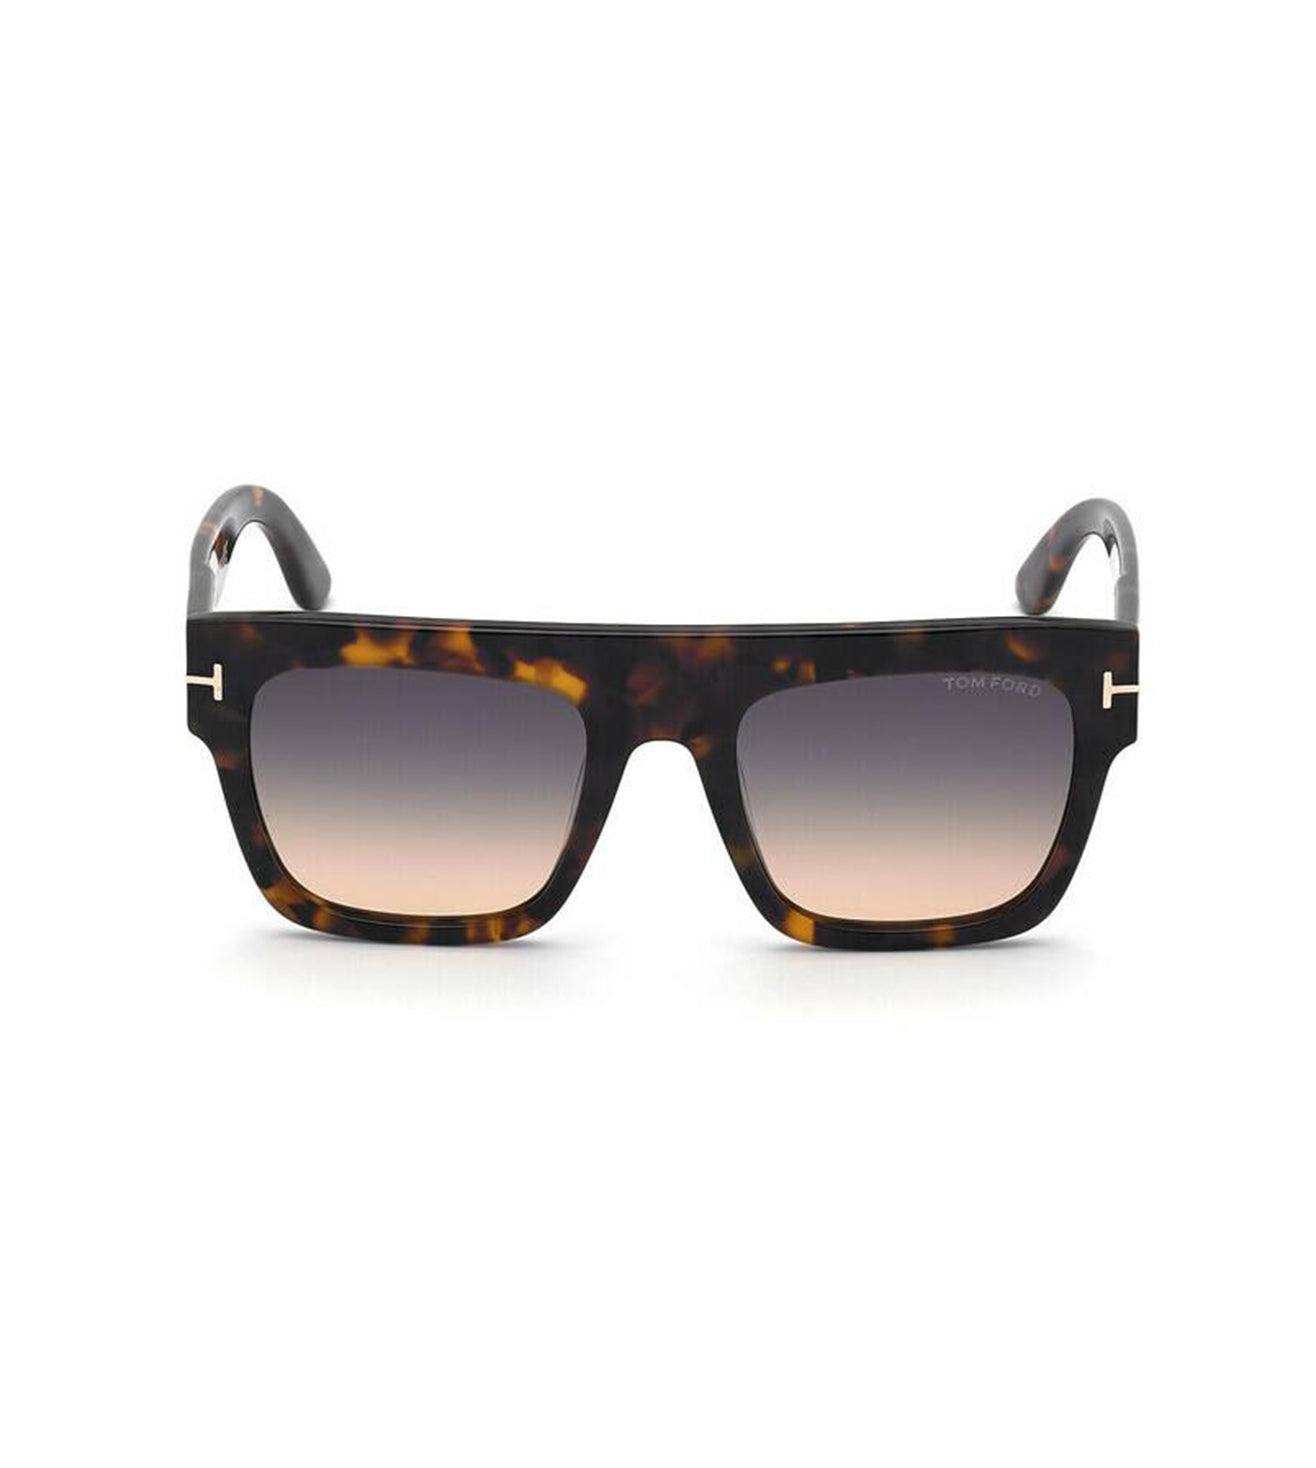 Tom Ford Women's Grey Gradient Square Sunglasses